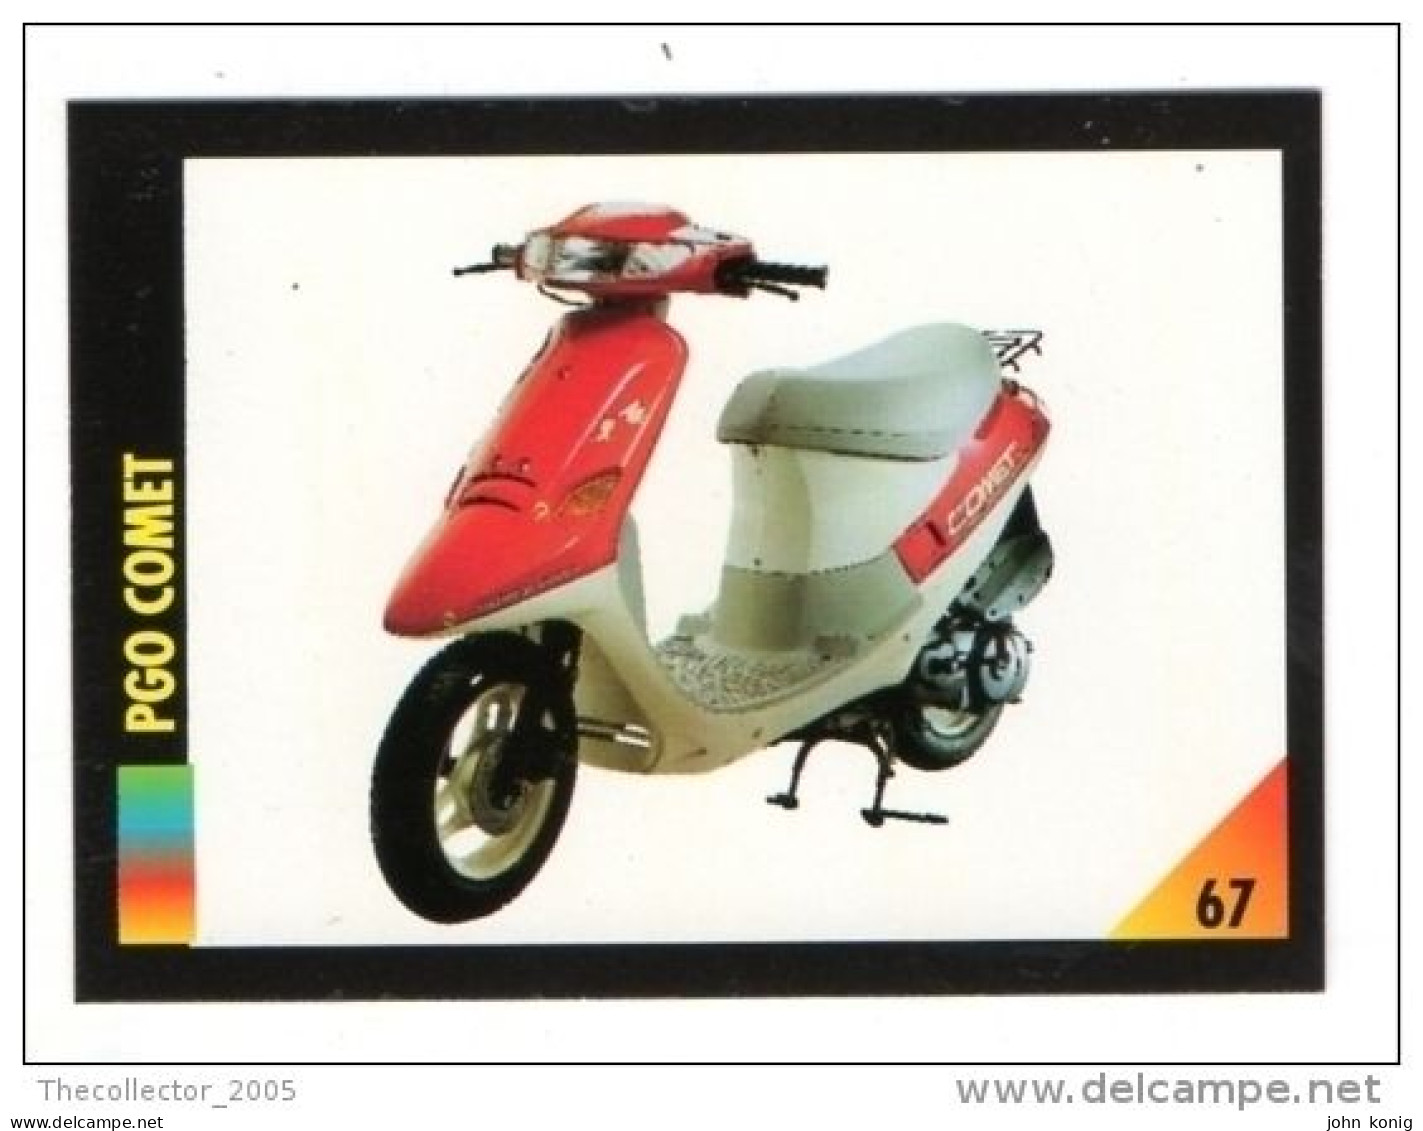 FIGURINA TRADING CARDS - LA MIA MOTO - MY MOTORBIKE - MASTERS EDIZIONI (1993) - PGO COMET - Moteurs